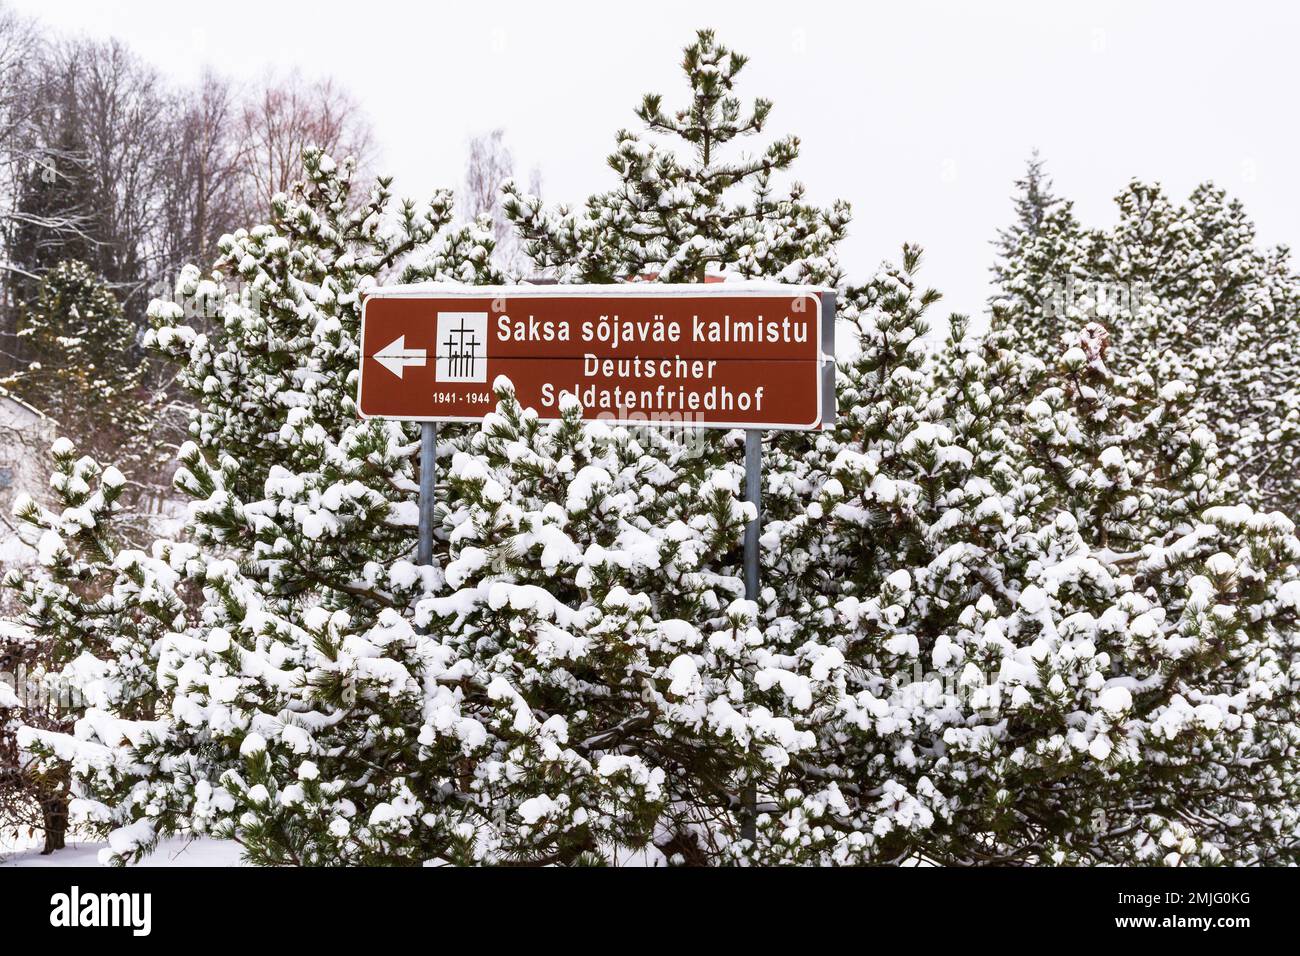 German army cemetery sign  in Viljandi Estonia Stock Photo